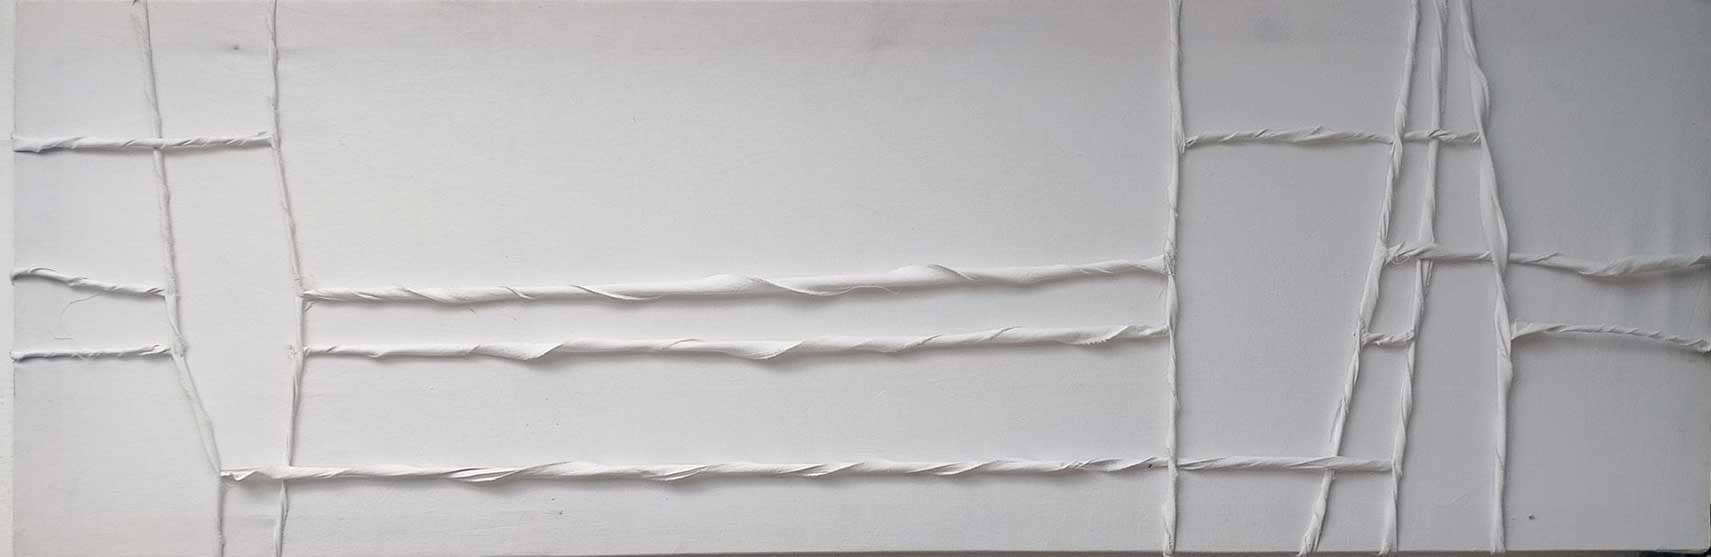 white-window-2018-Denise-Gemin-textile-art
view01